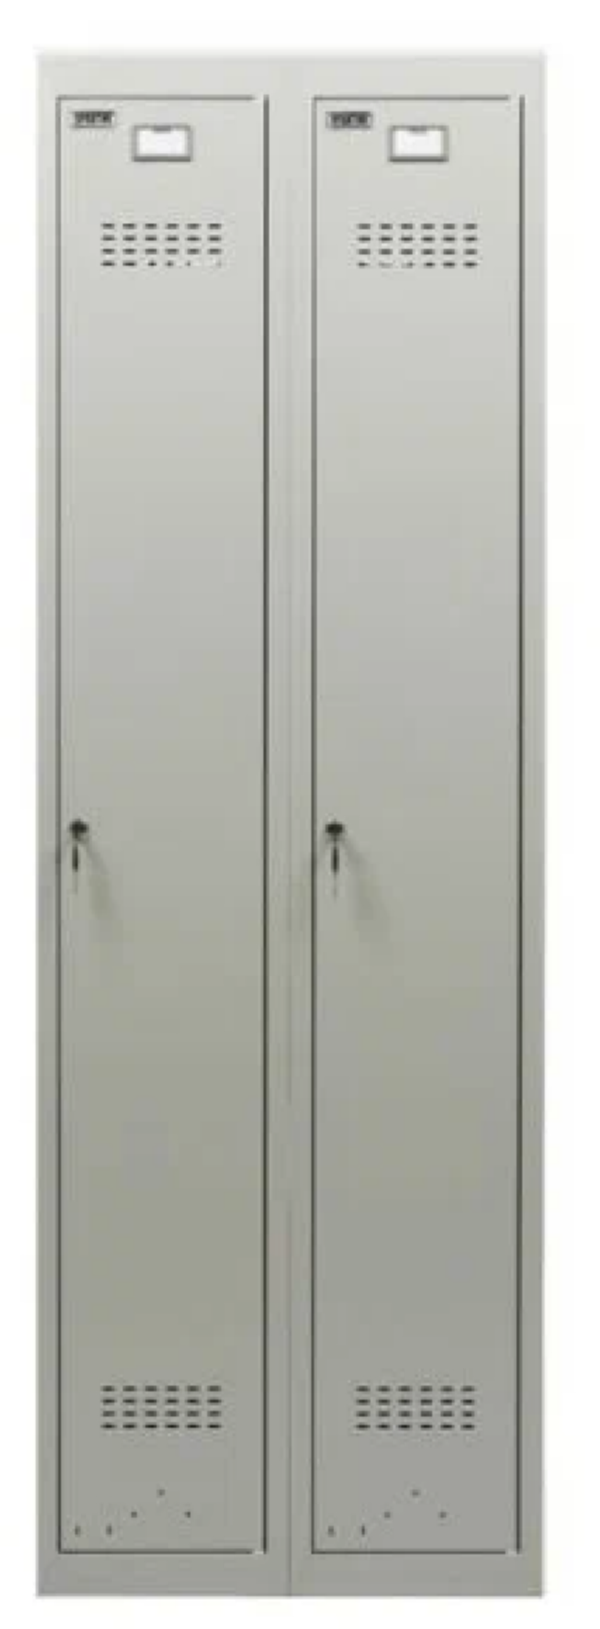 шкаф для раздевалок практик стандарт ls k 21 800